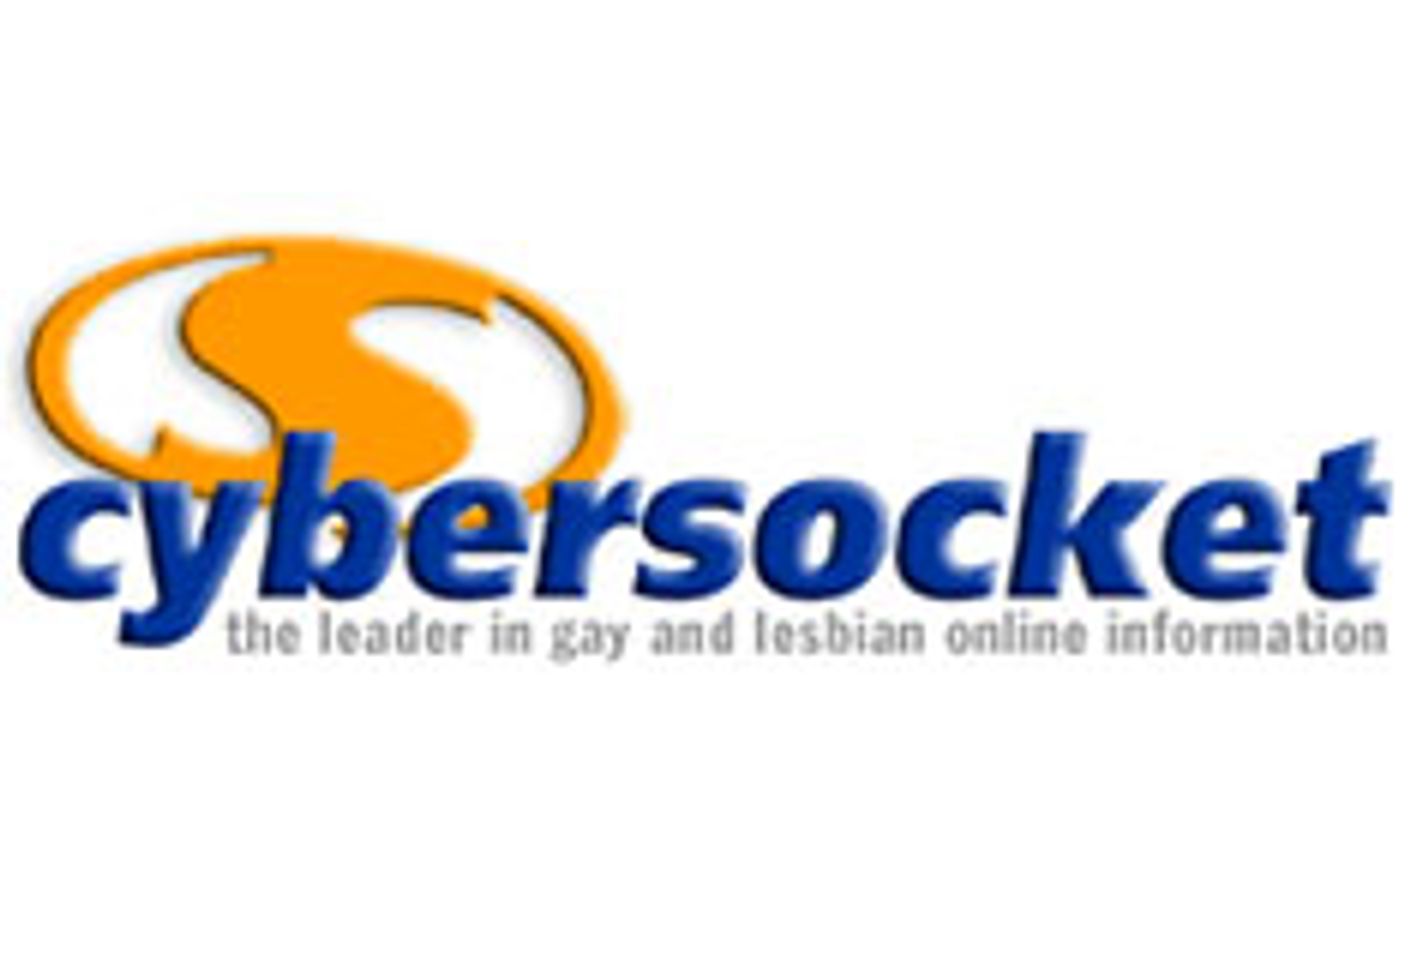 Company Profile: Cybersocket